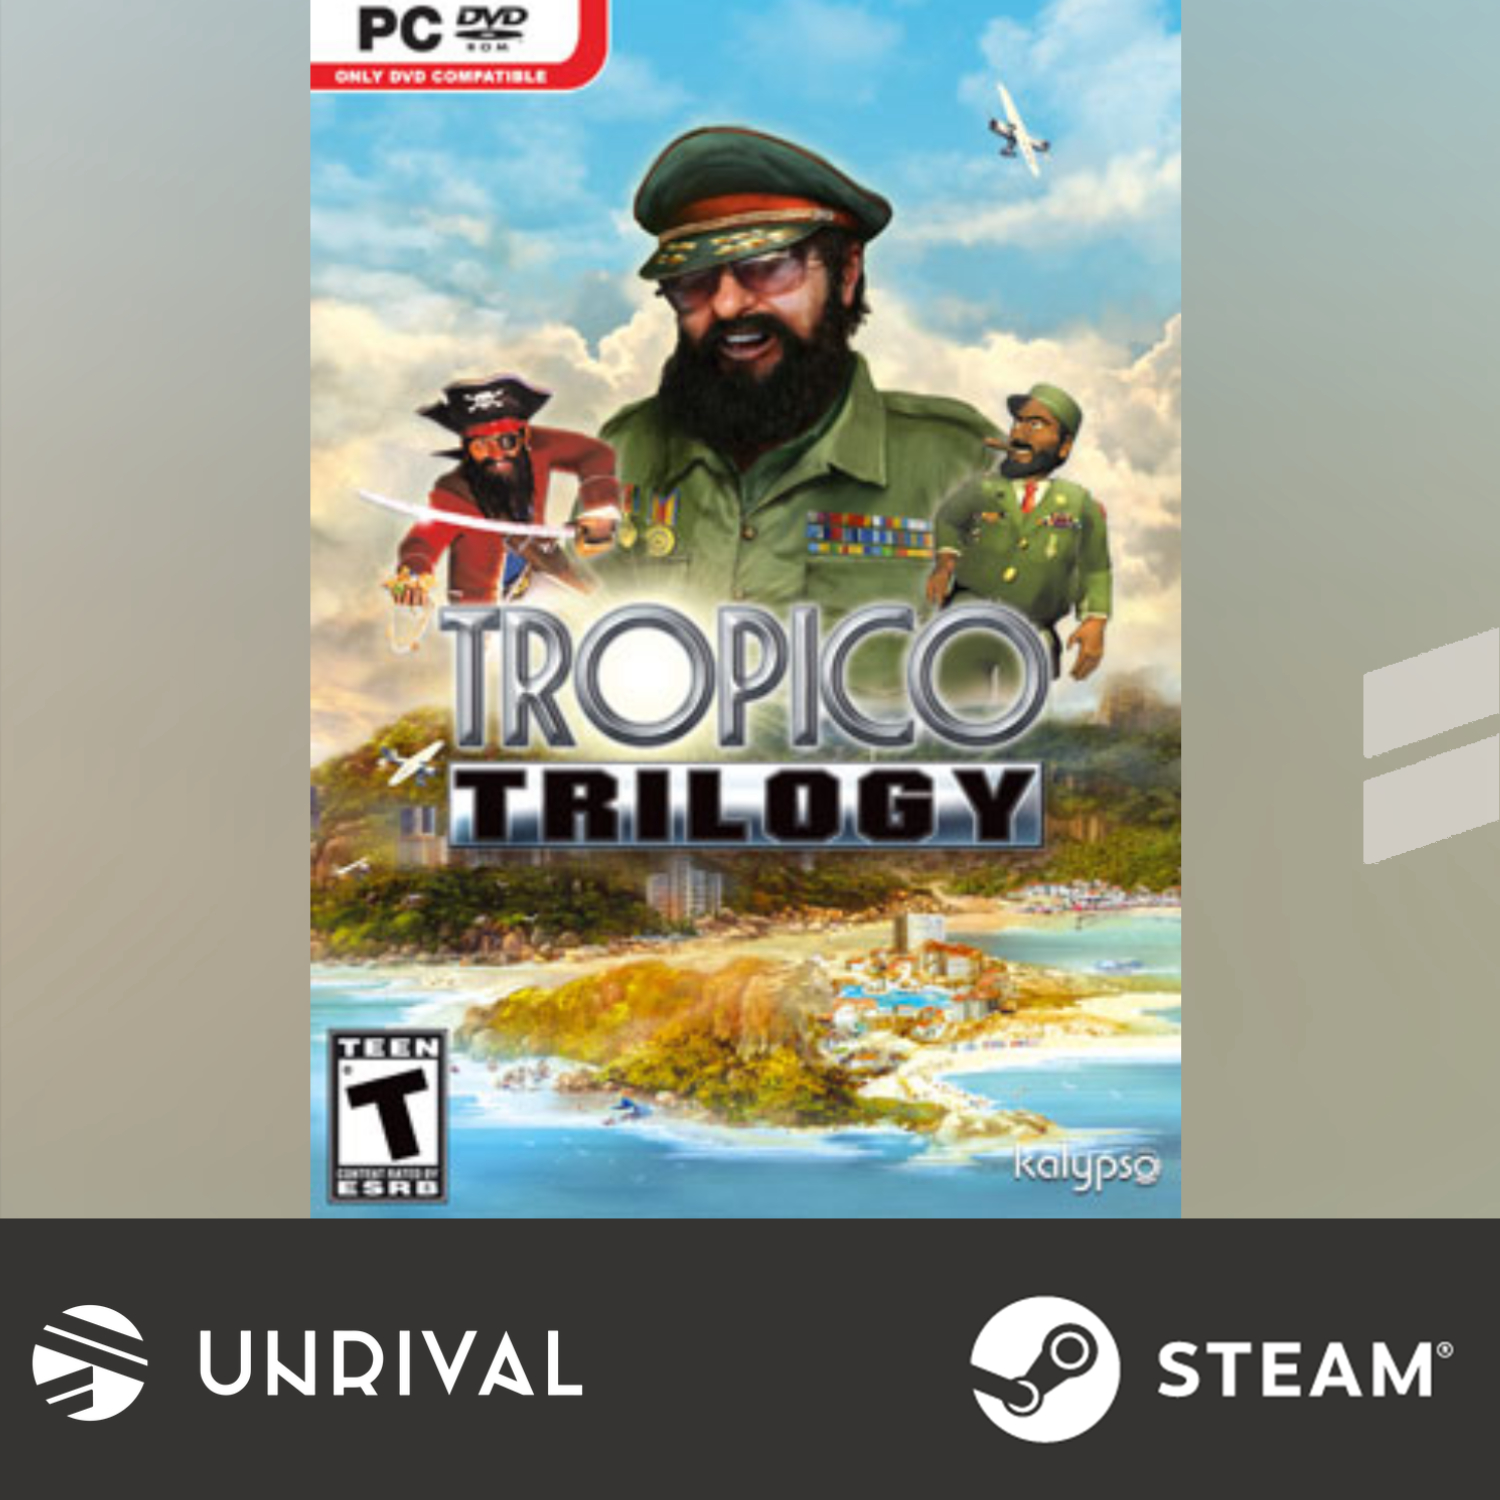 Tropico Trilogy PC Digital Download Game - Unrival